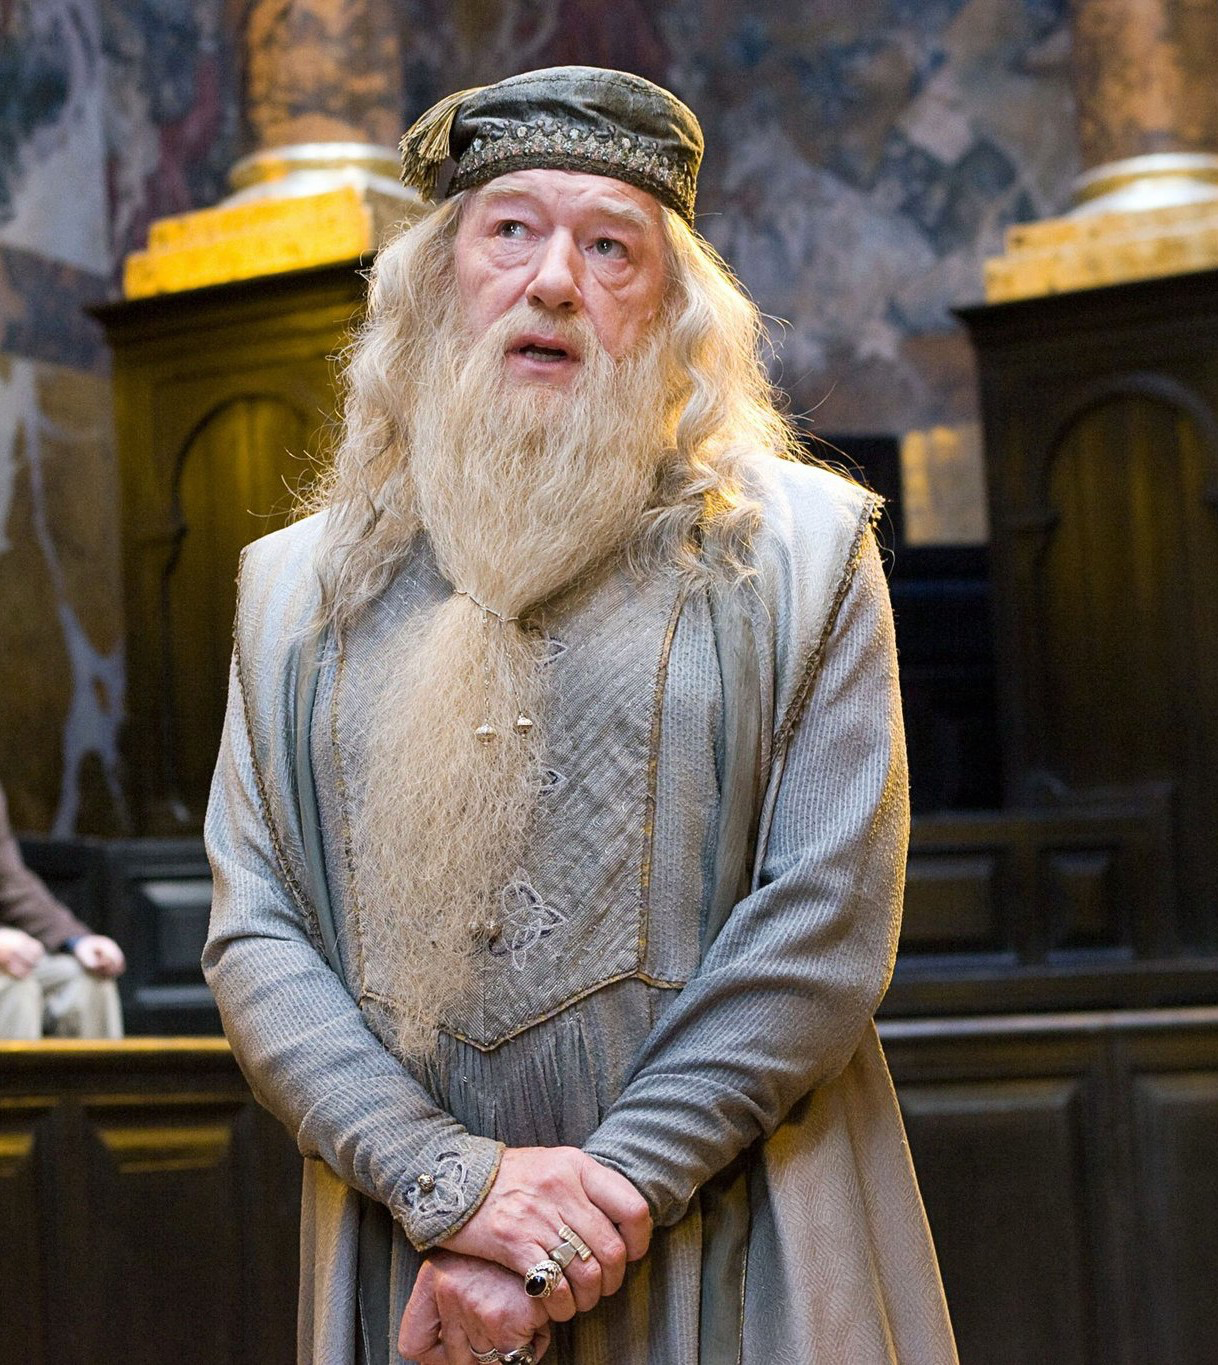 The Finger Rings of Albus Dumbledore